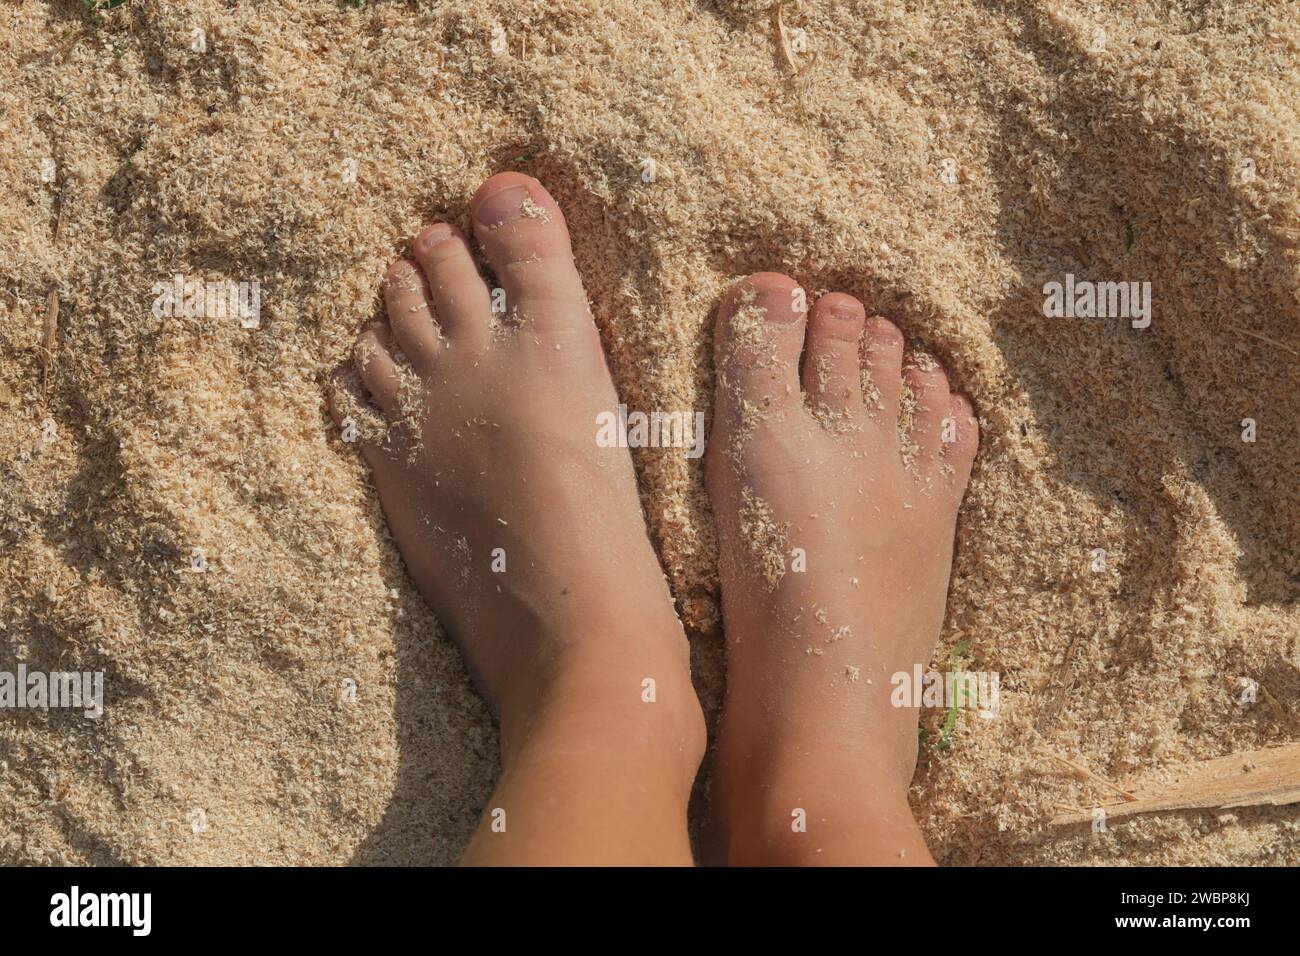 Child's feet standing on sawdust. Sensory perception, sensitivity and flat feet problem in children Stock Photo